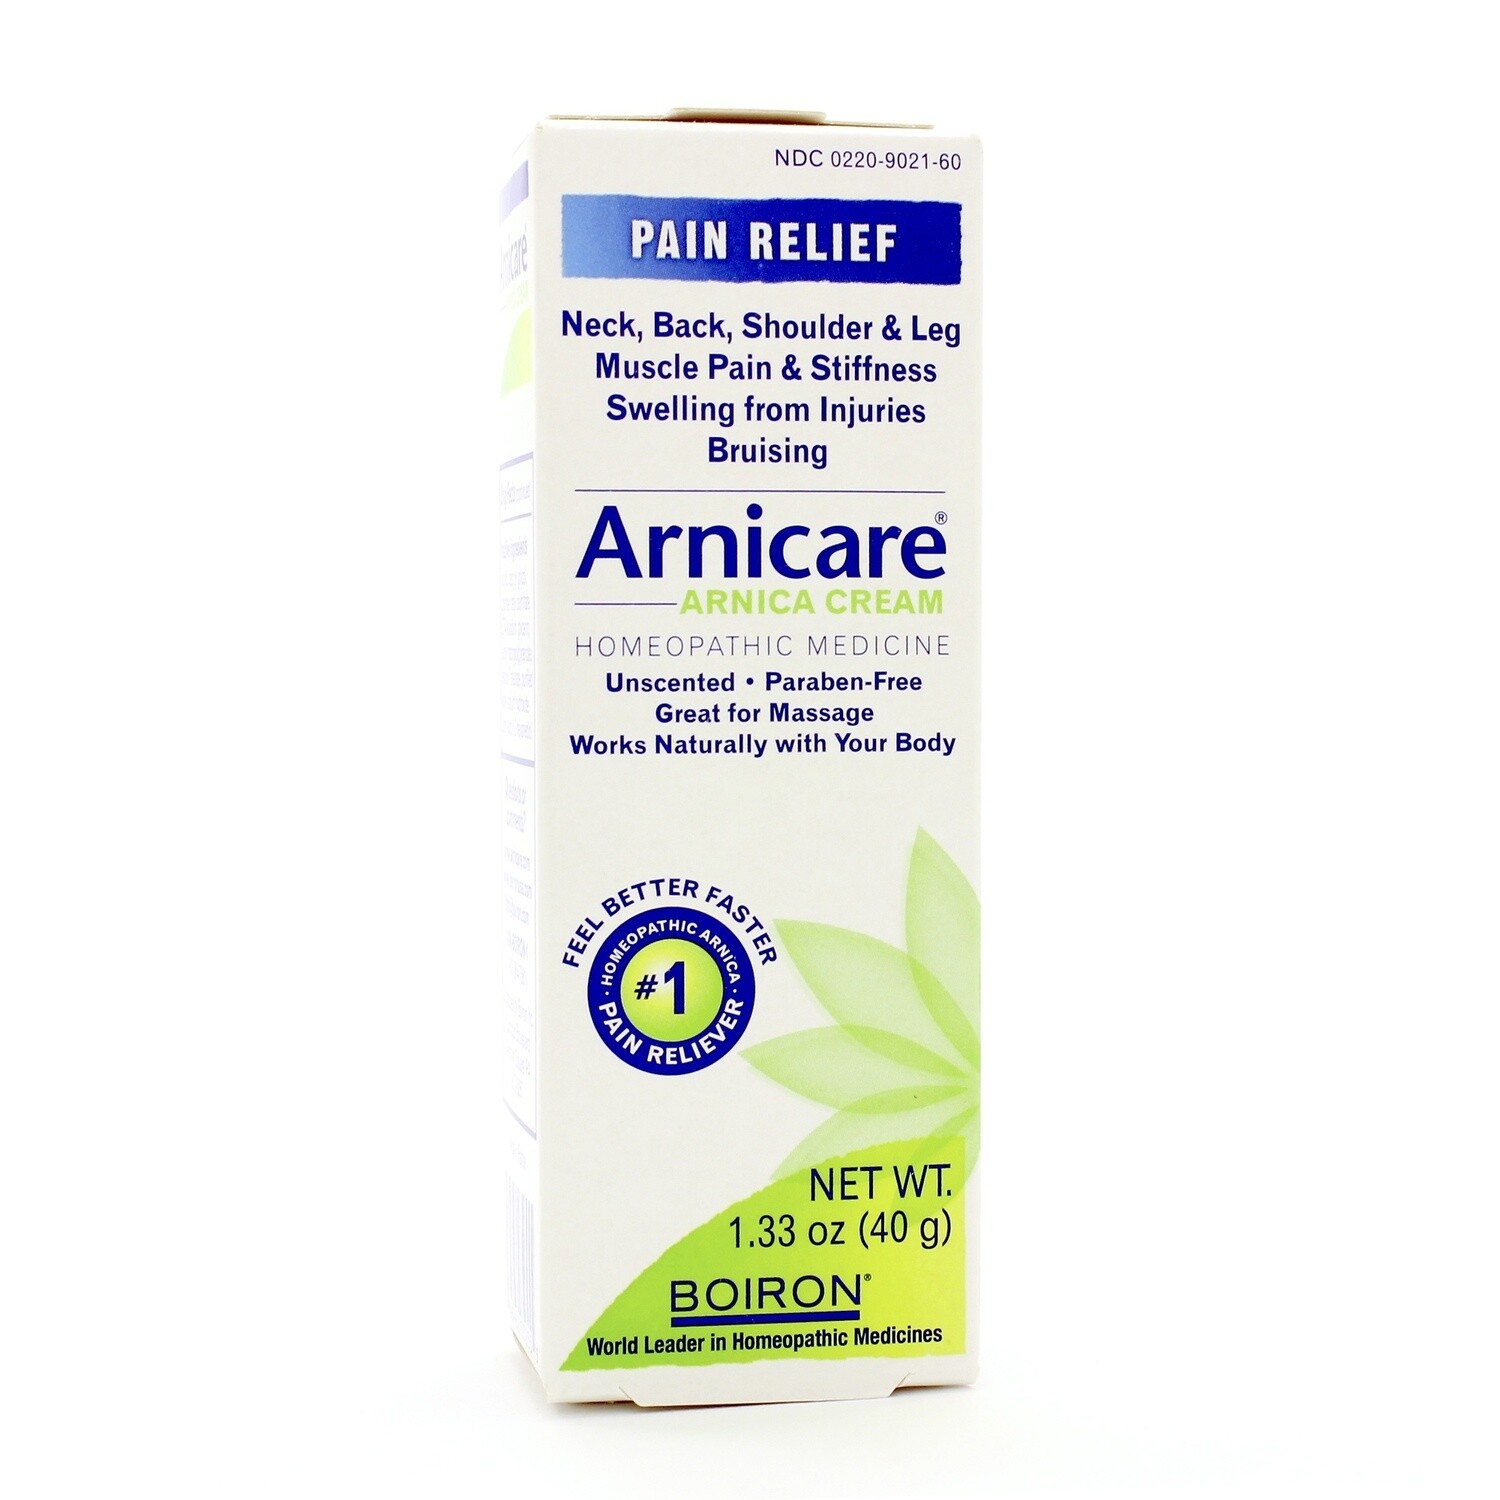 Arnicare Cream by Boiron